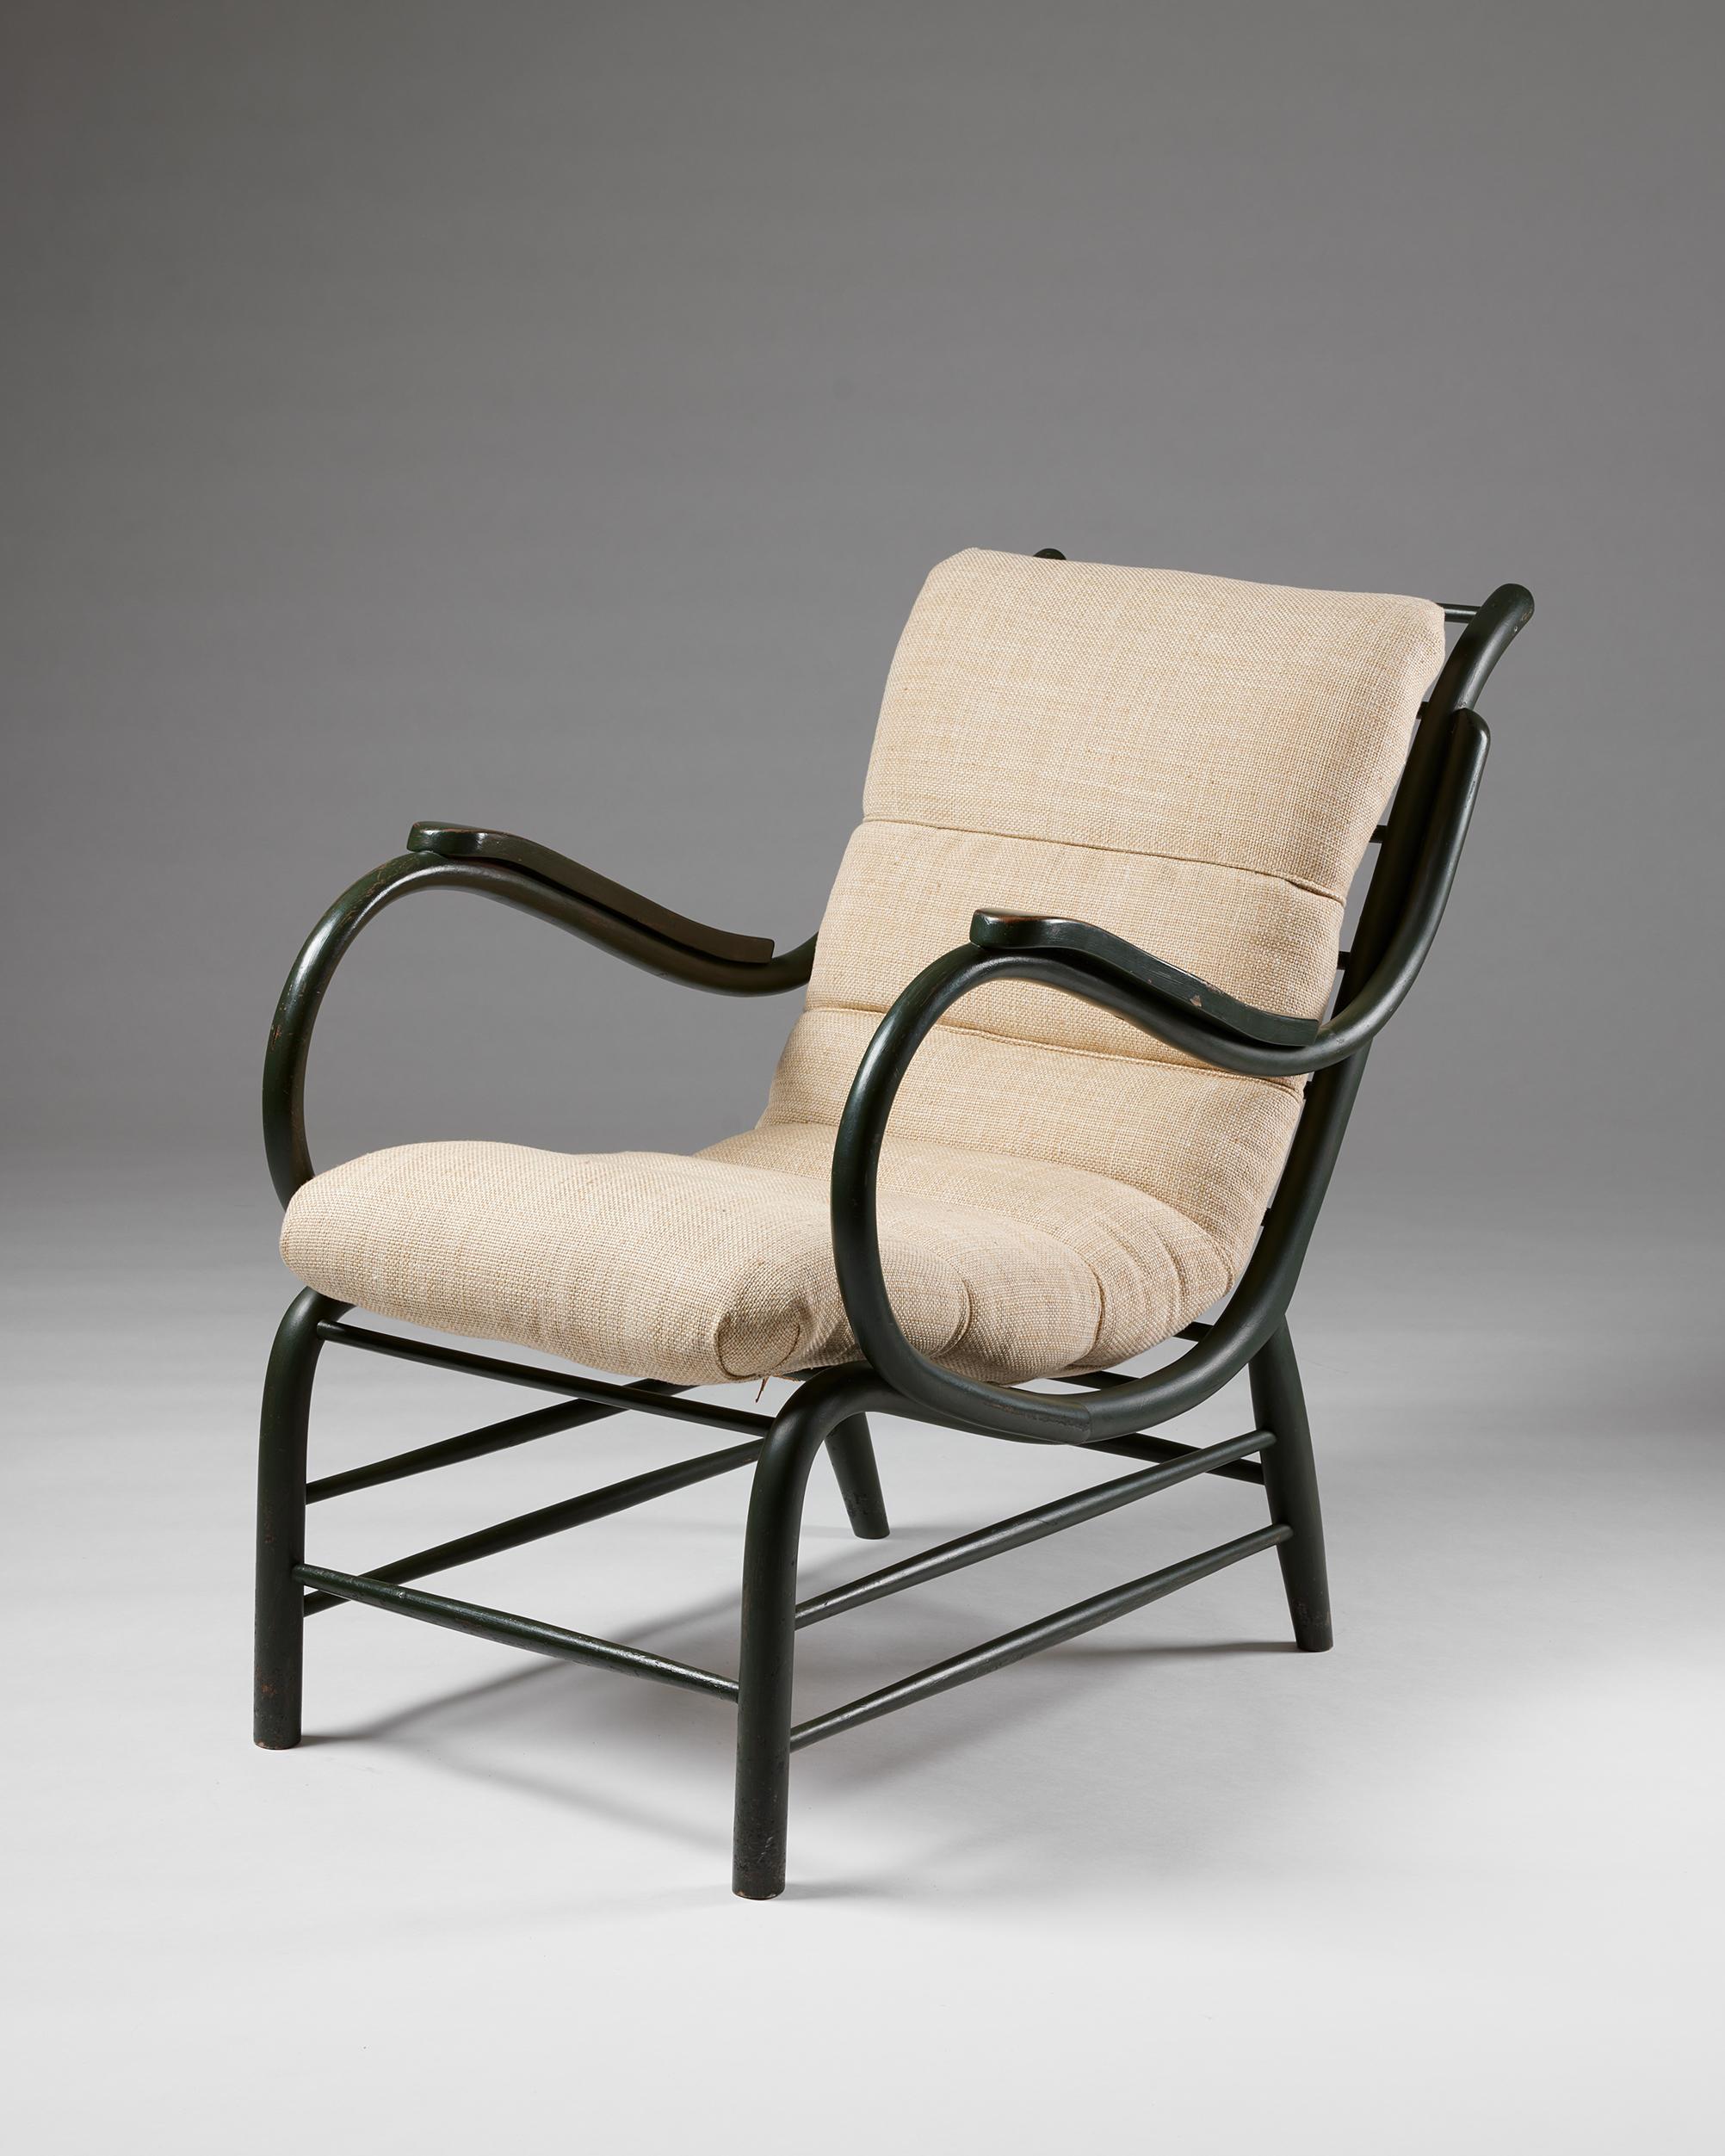 Armchair, anonymous, Sweden, 1940s

Lacquered wood and textile upholstery.

H: 86 cm
W: 60 cm
D: 108 cm
SH: 40 cm
AH: 66 cm